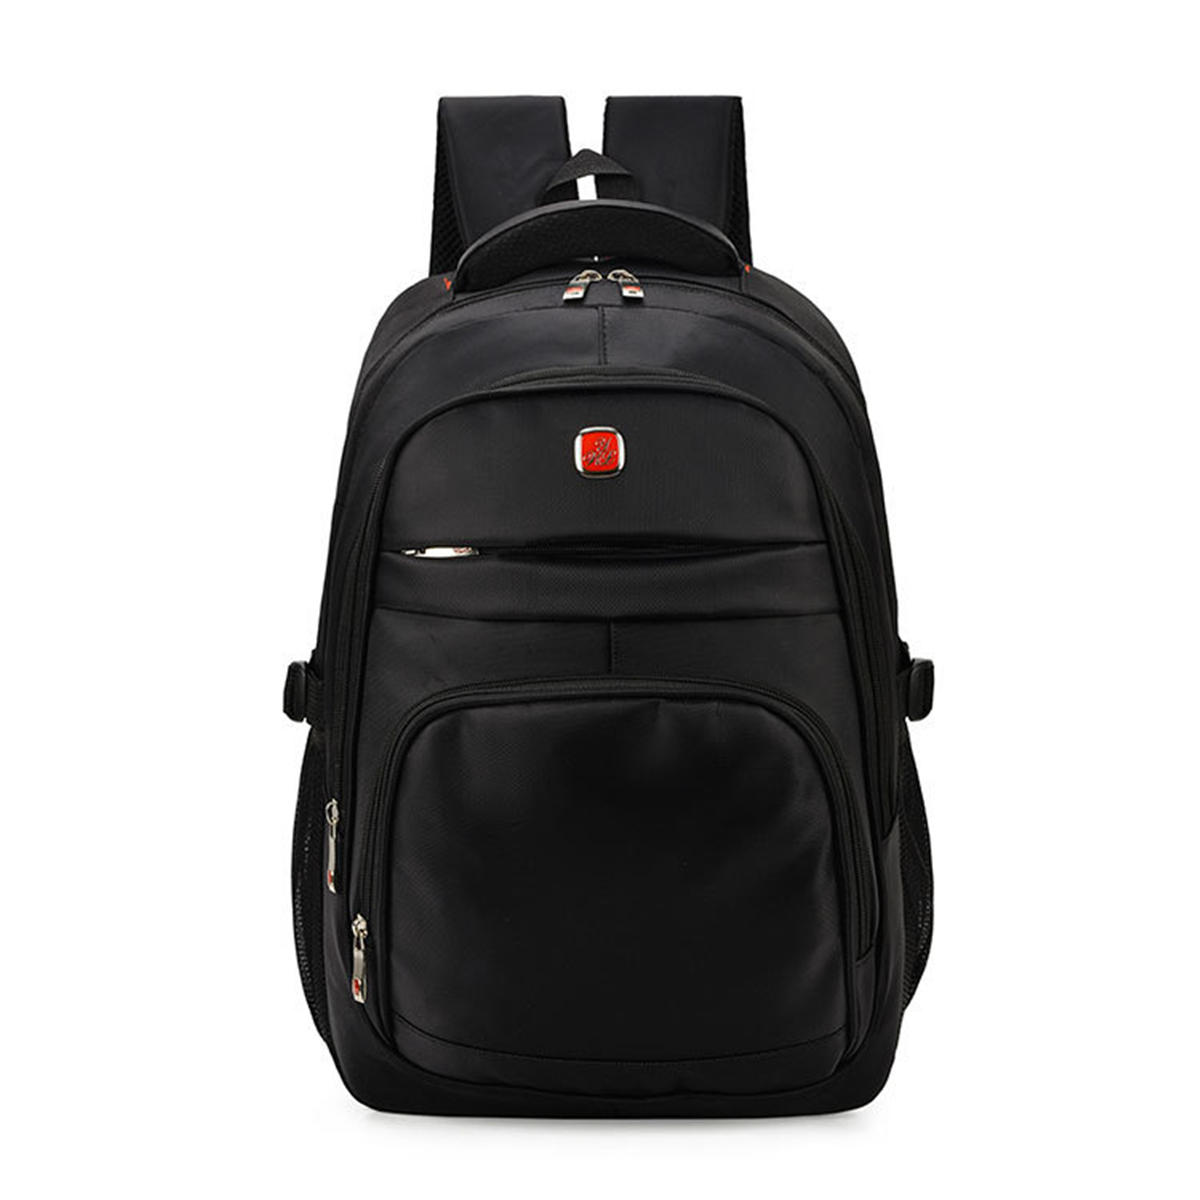 Ao ar livre Nylon Mochila 15 polegadas Laptop Bolsa Camping Travel Handbag Mens Shoulder Bolsa